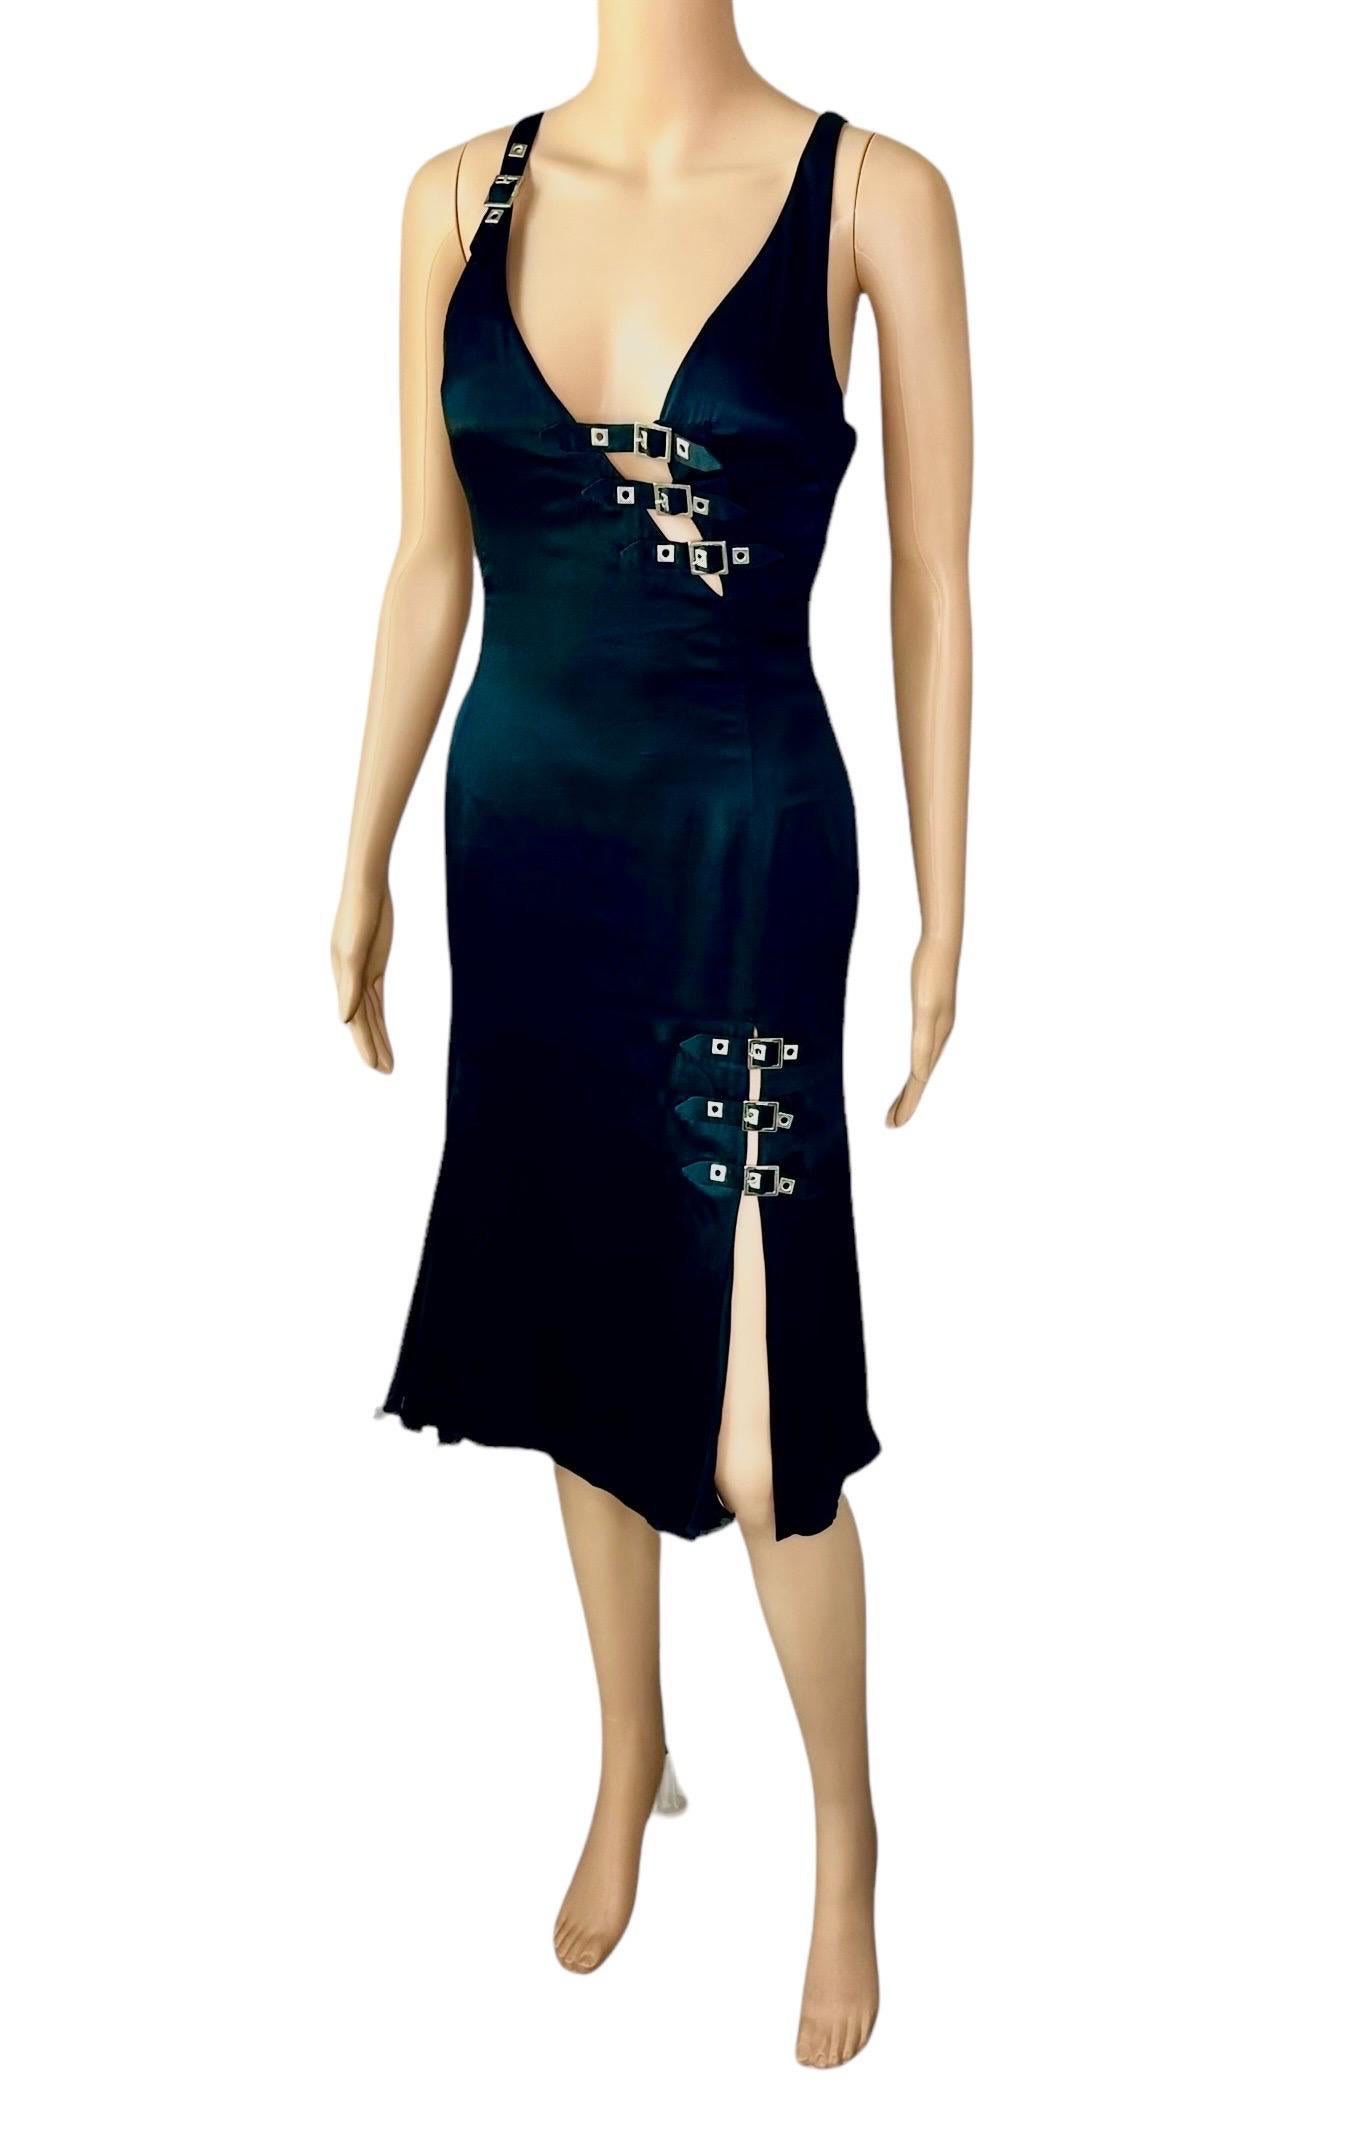 Versace F/W 2004 Embellished Buckle Studded Detail Plunging Black Evening Dress For Sale 5